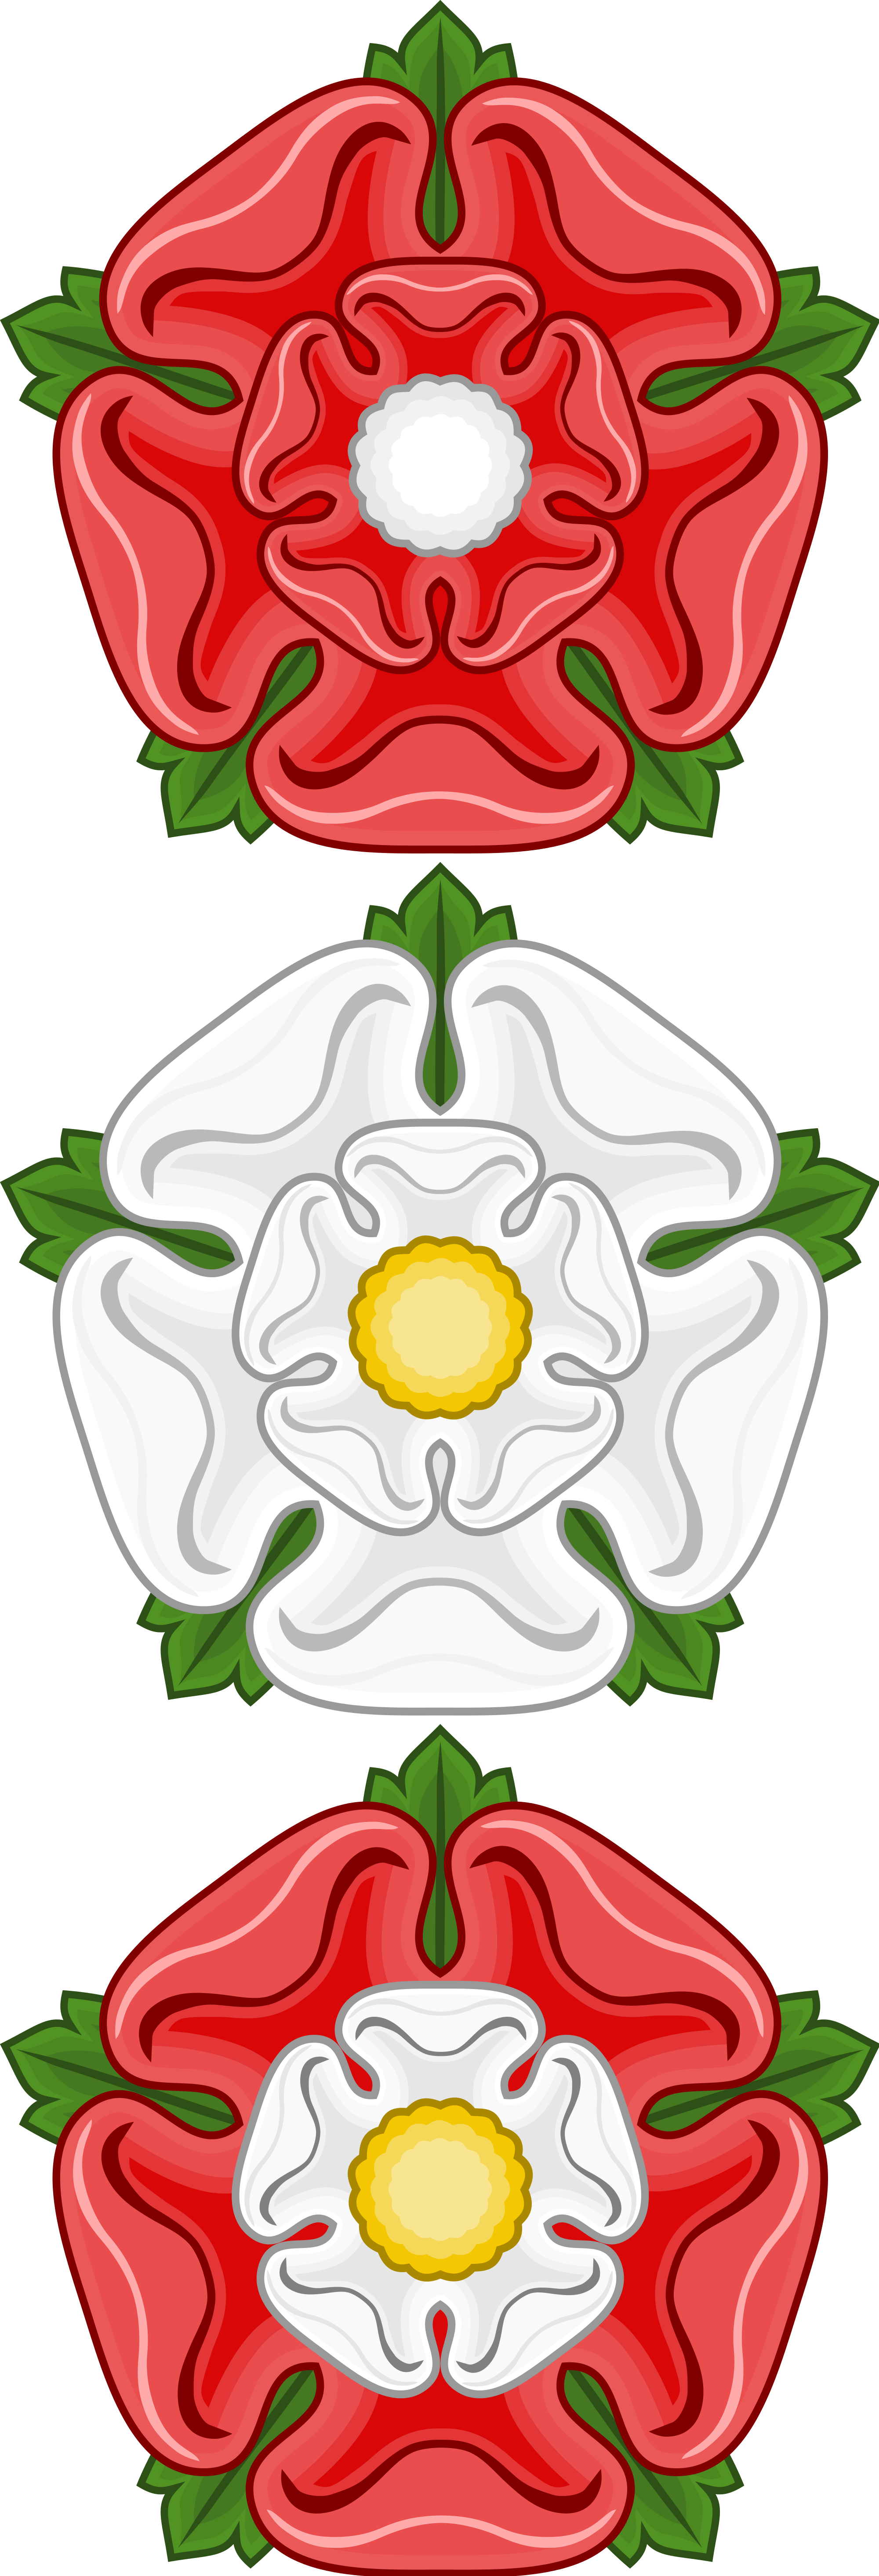 File:Royal Roses Badge of England.svg